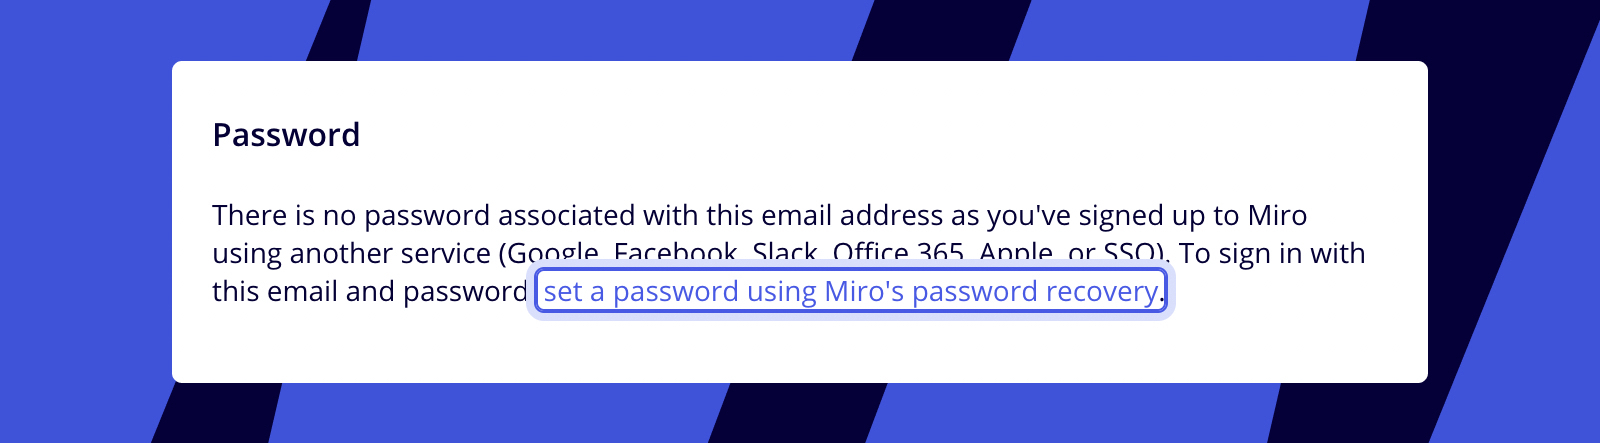 set_password.jpg